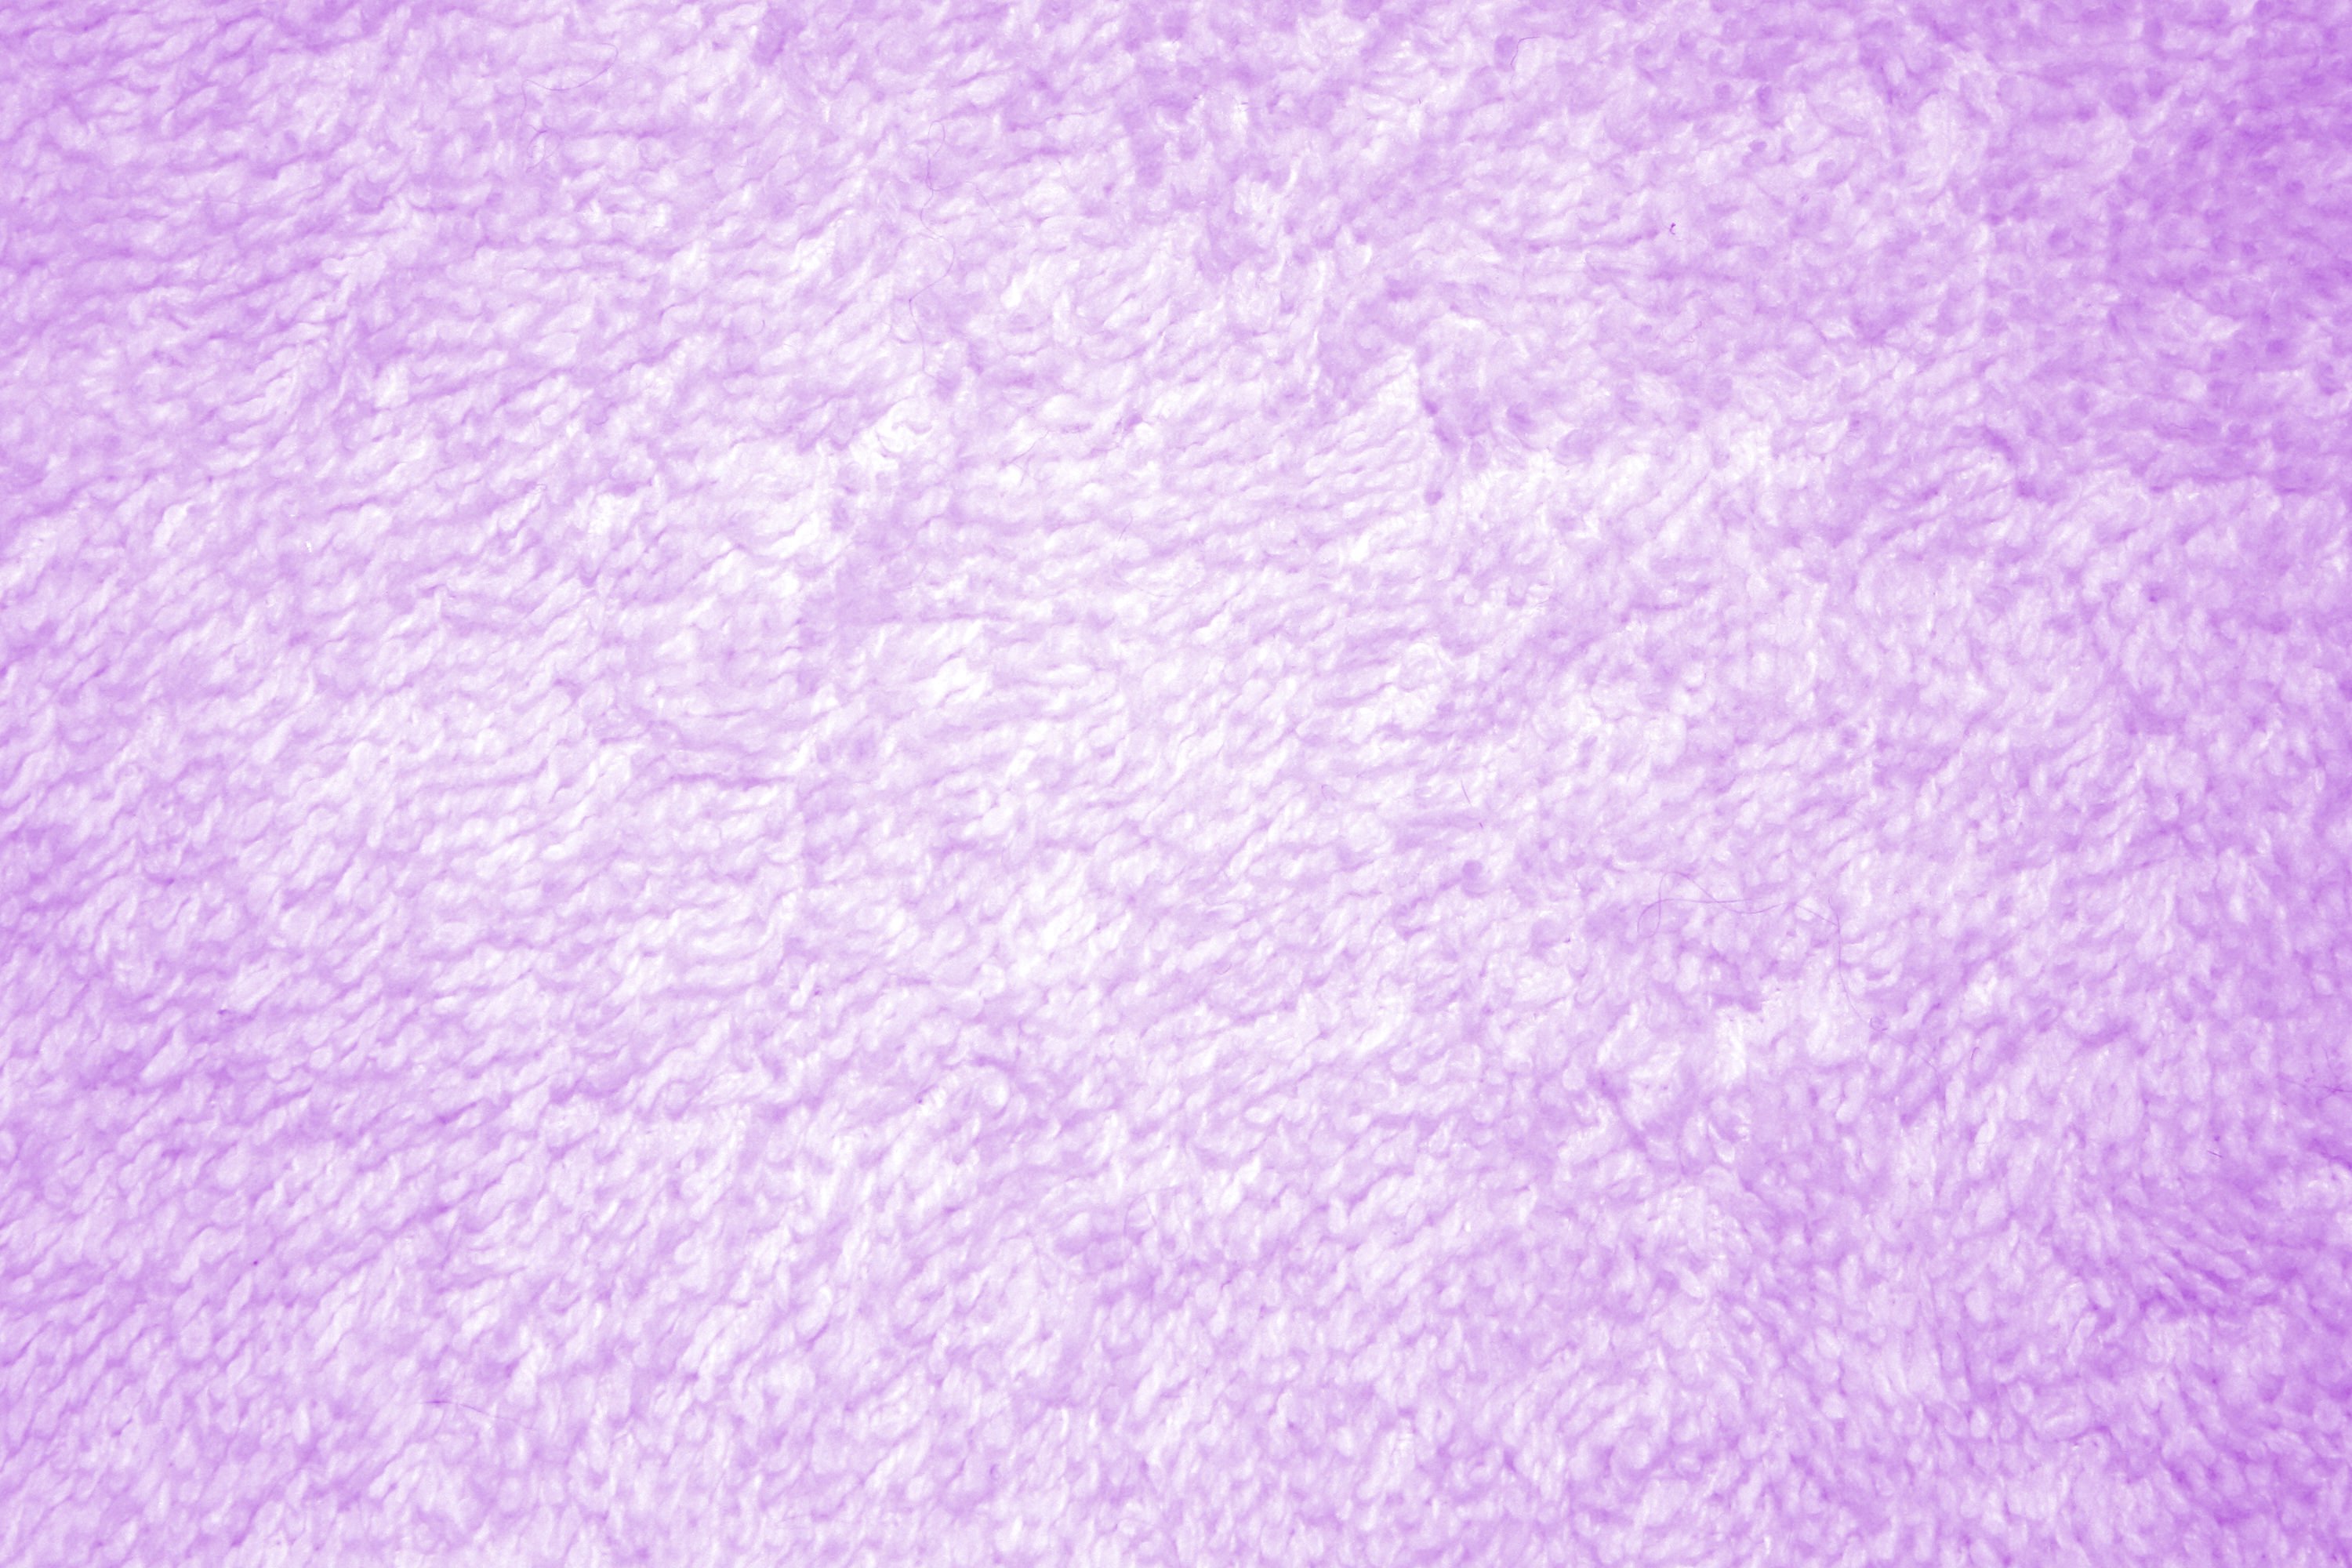 Purple Terry Cloth Texture Picture Free Photograph Photos Public